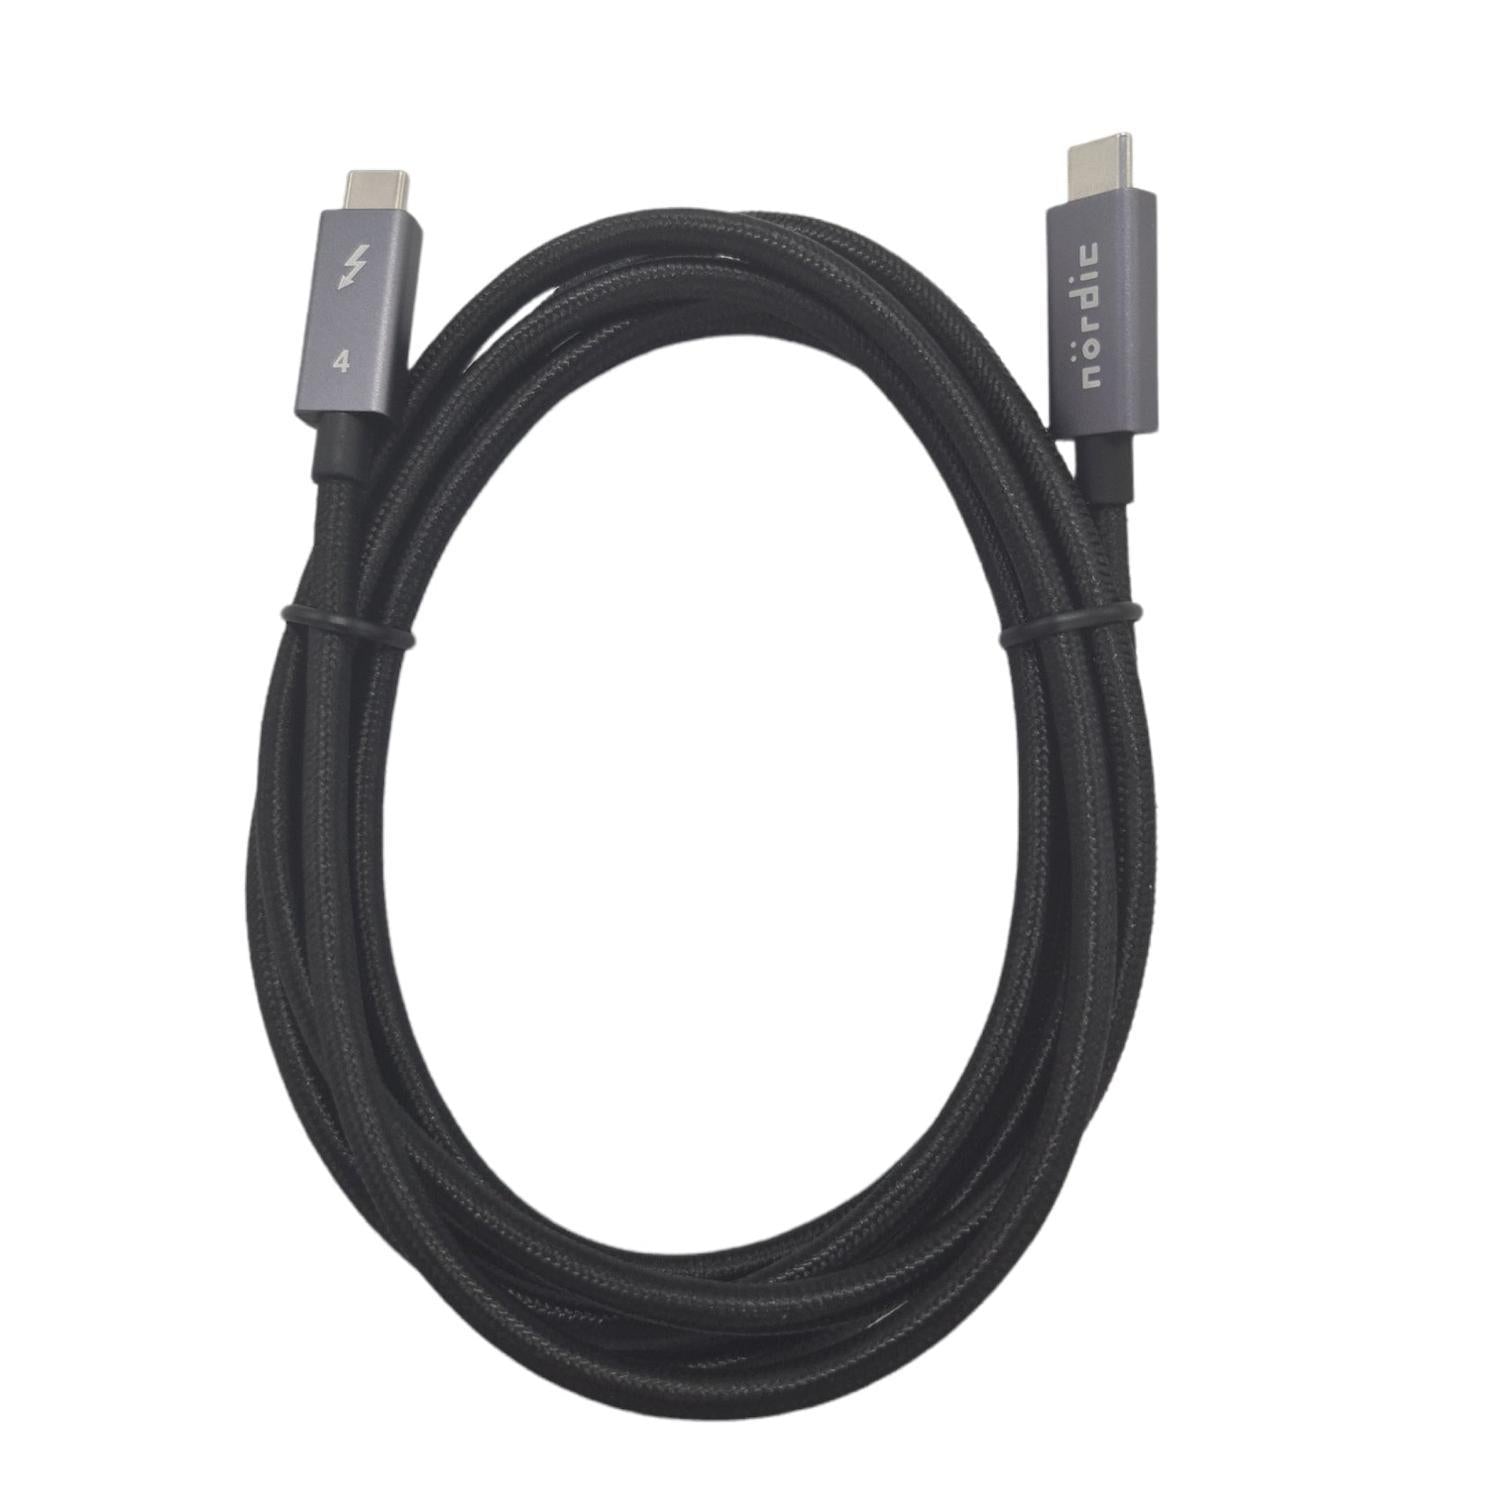 NÖRDIC 1m Thunderbolt 4 USB-C kabel 40Gbps 100W lading 8K video kompatibel med USB 4 og Thunderbolt 3